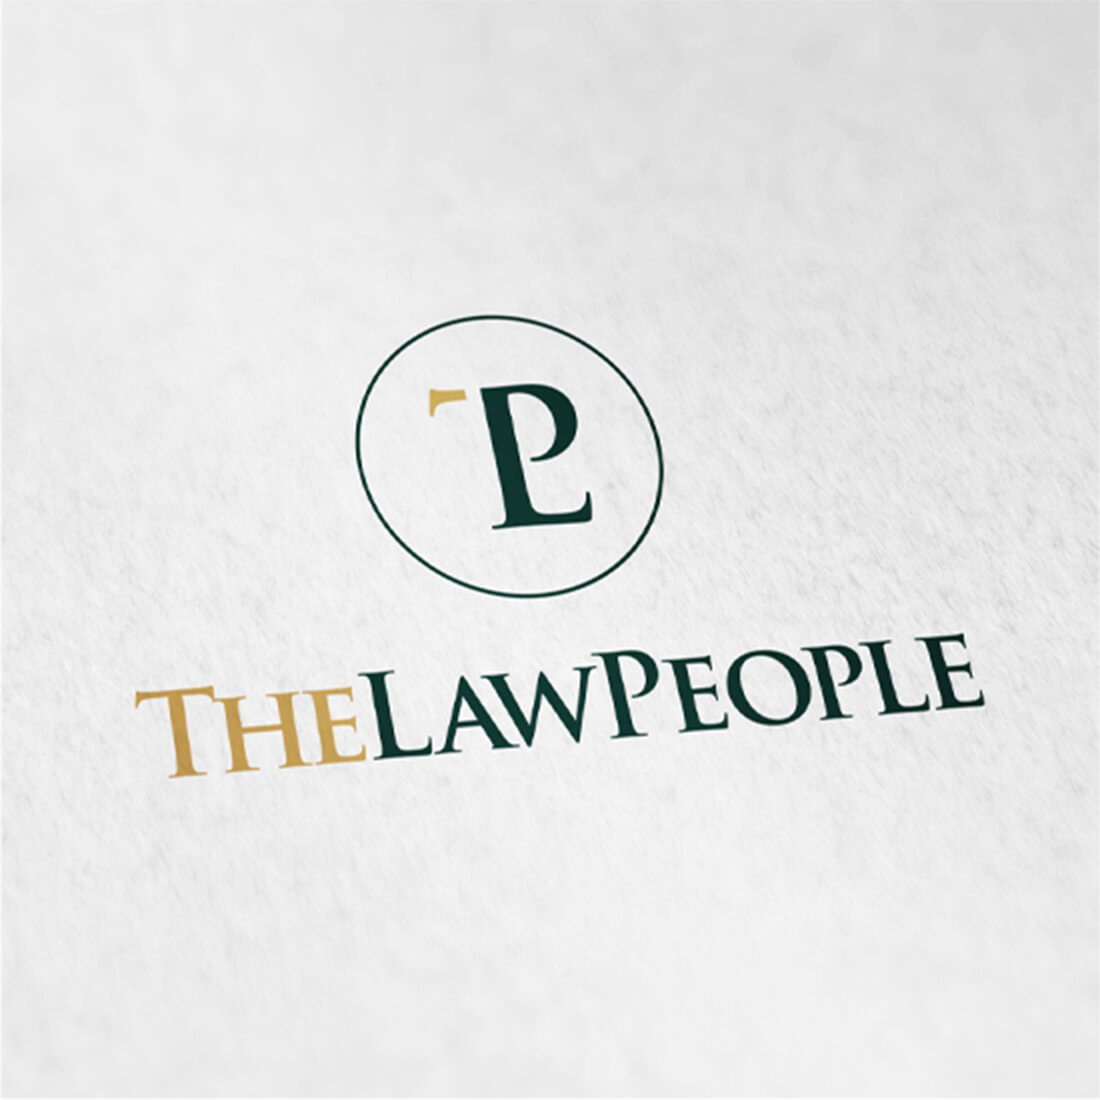 The Law People branding